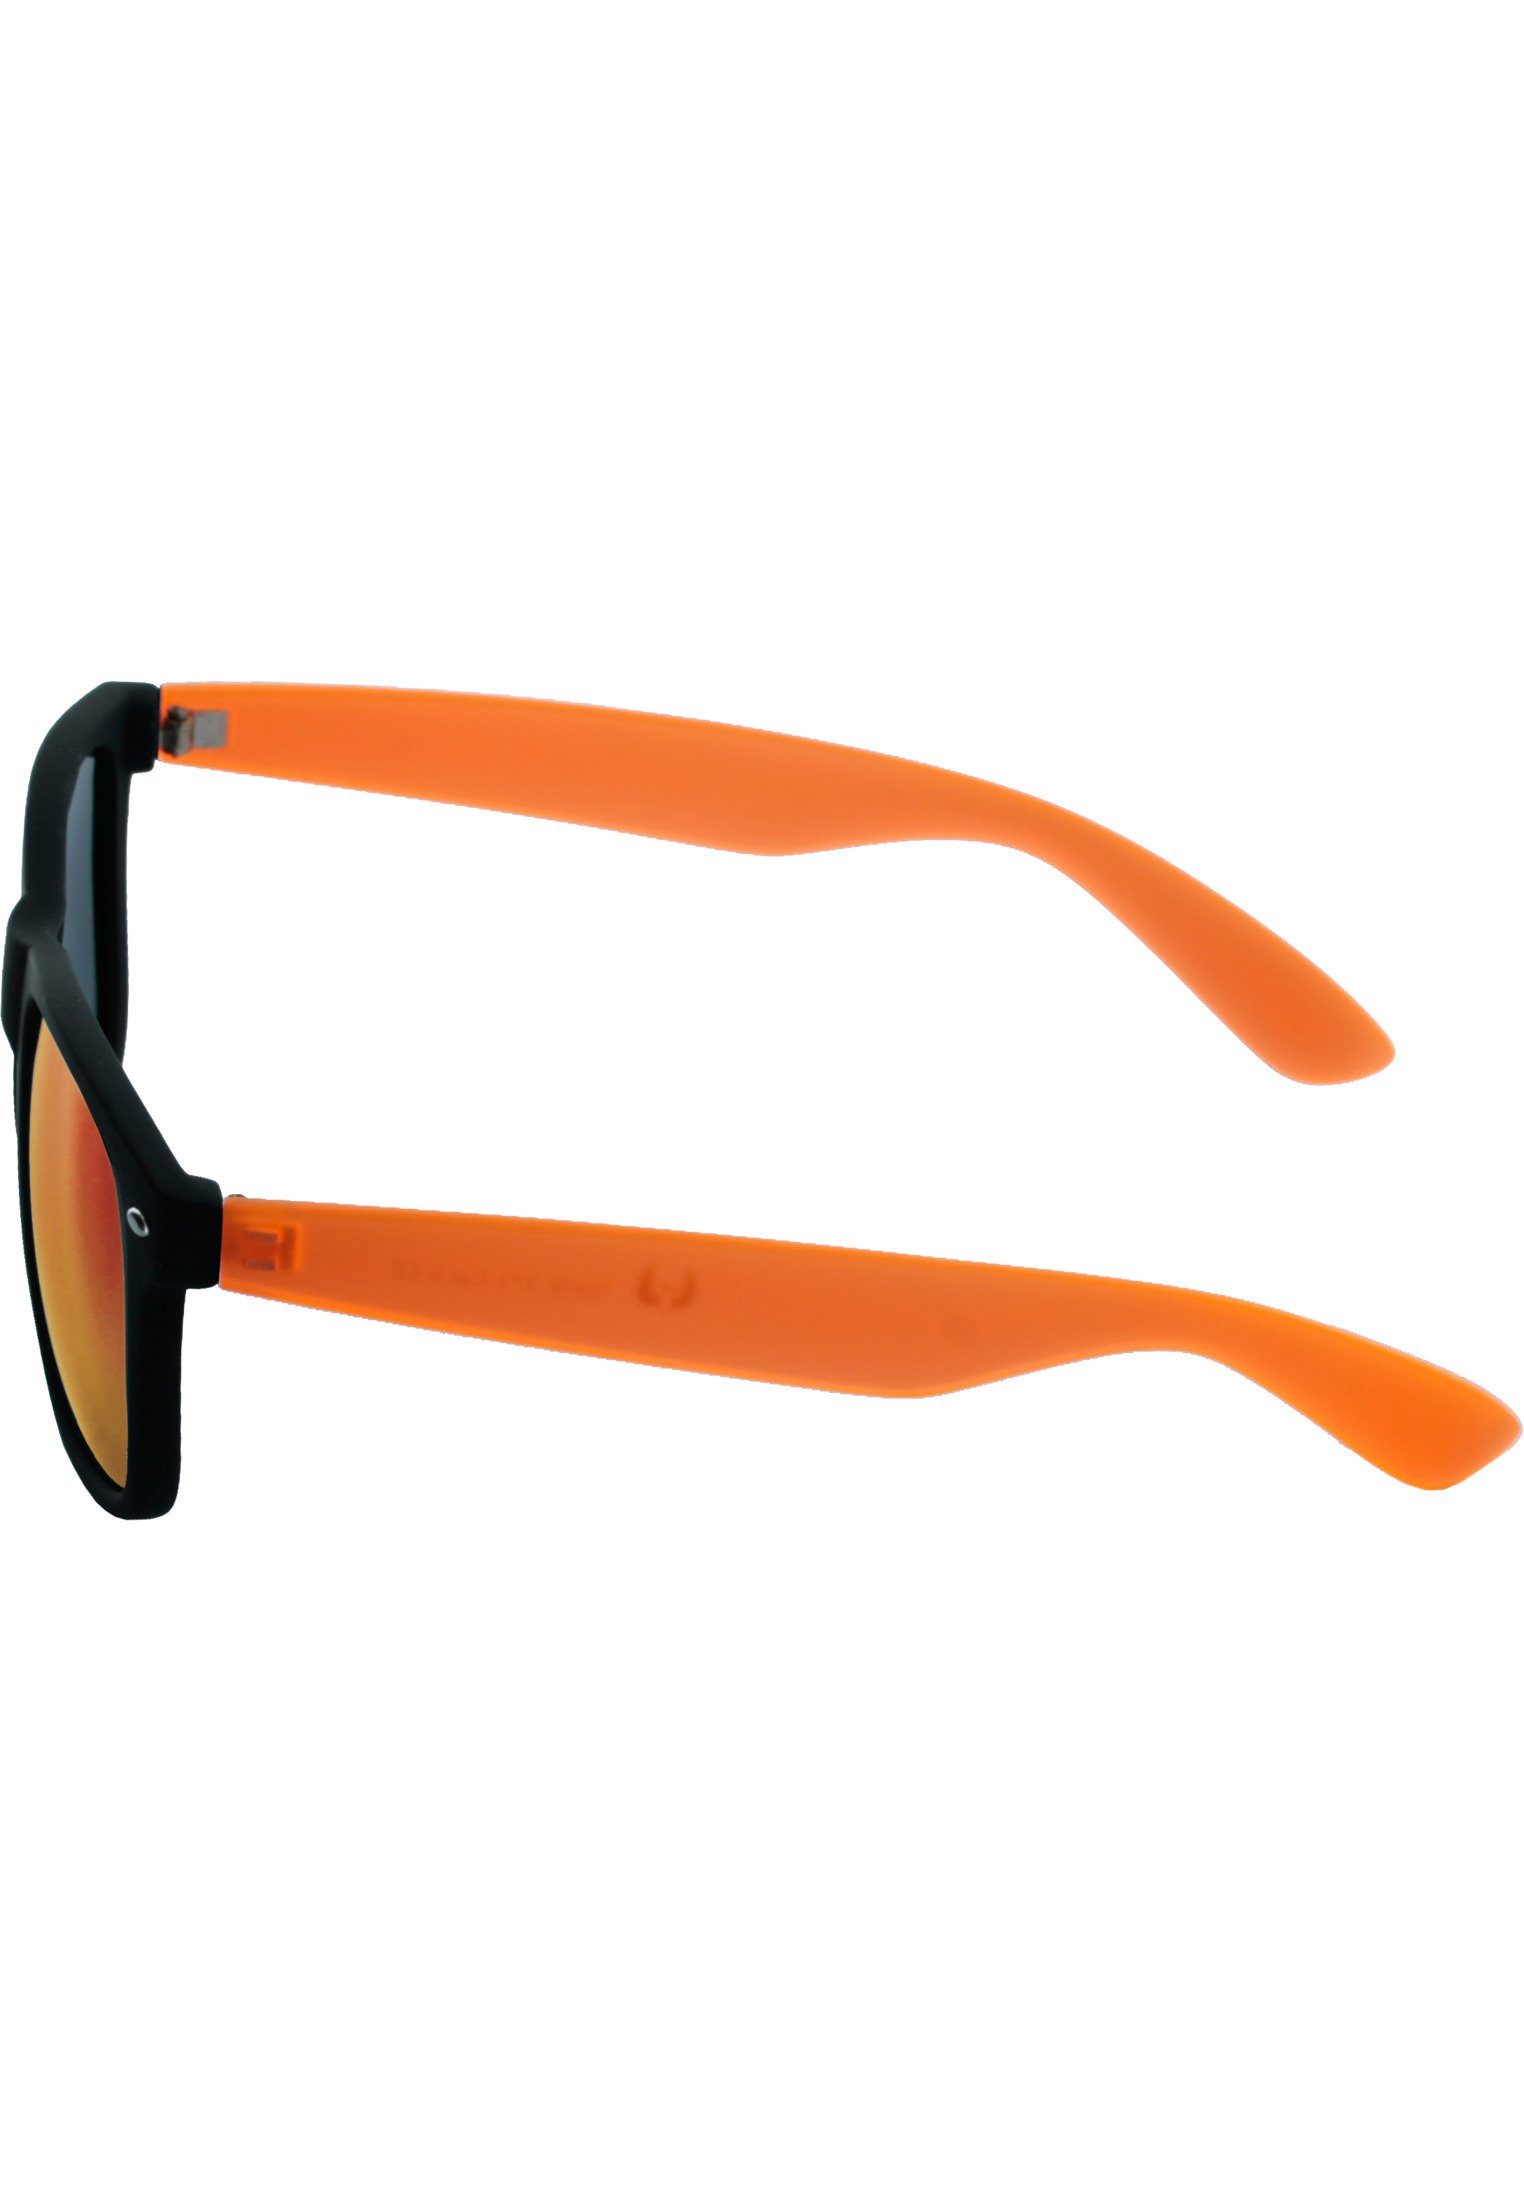 MSTRDS Likoma Sunglasses Mirror Sonnenbrille Accessoires blk/ora/ora